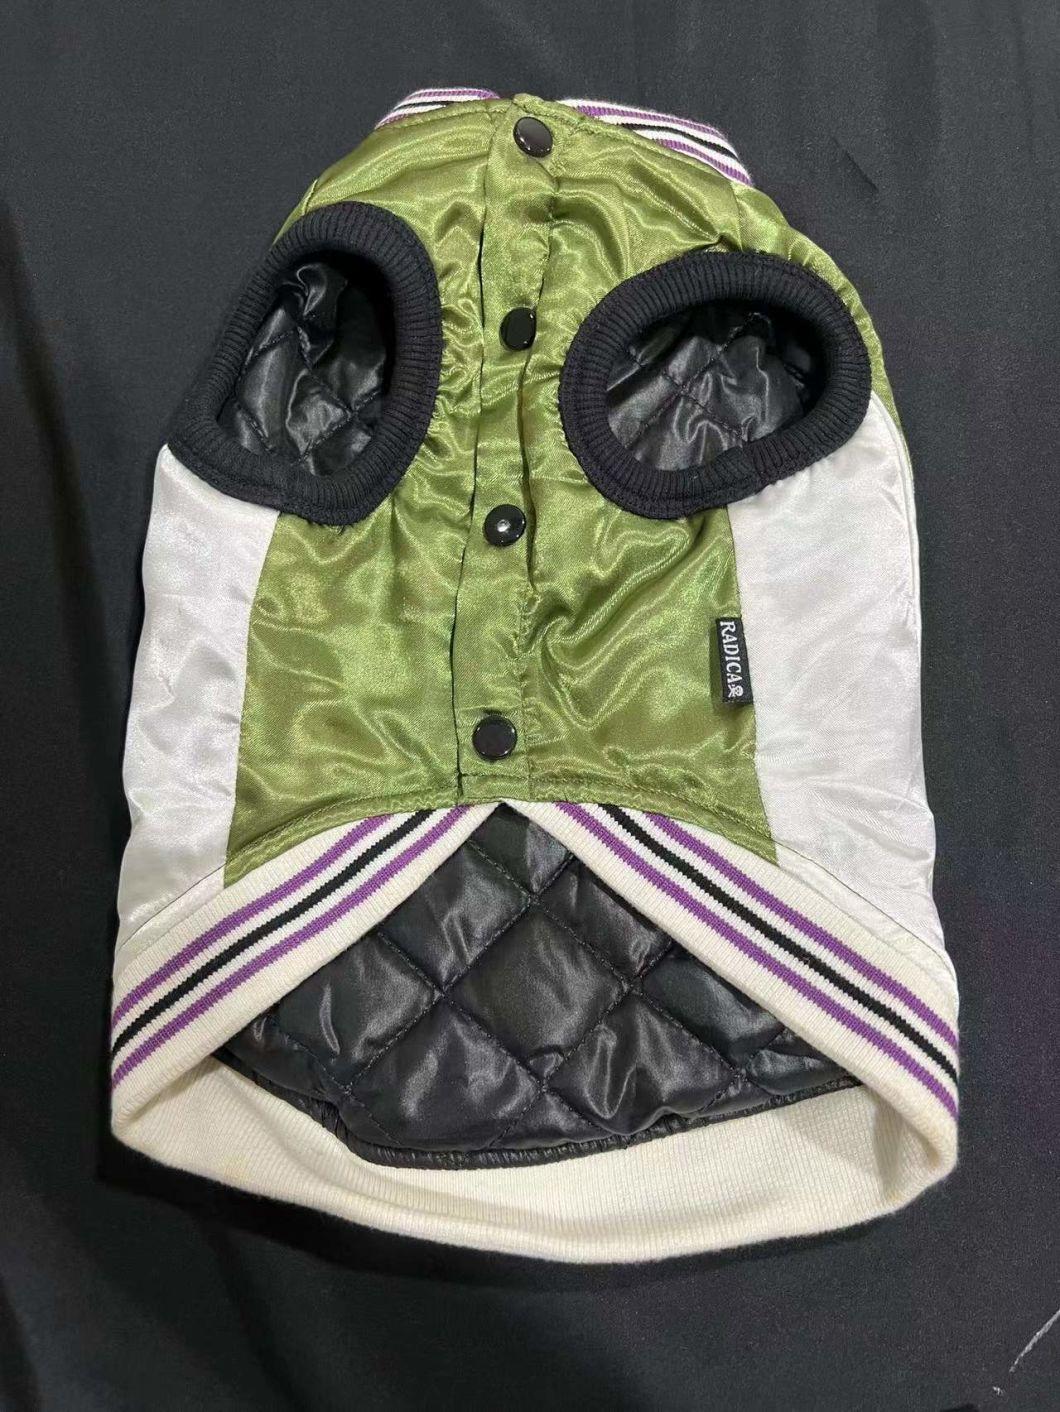 Worm Coat for Pets Dog Worm Coat Jacket Dog Clothing with Heavy Embroider